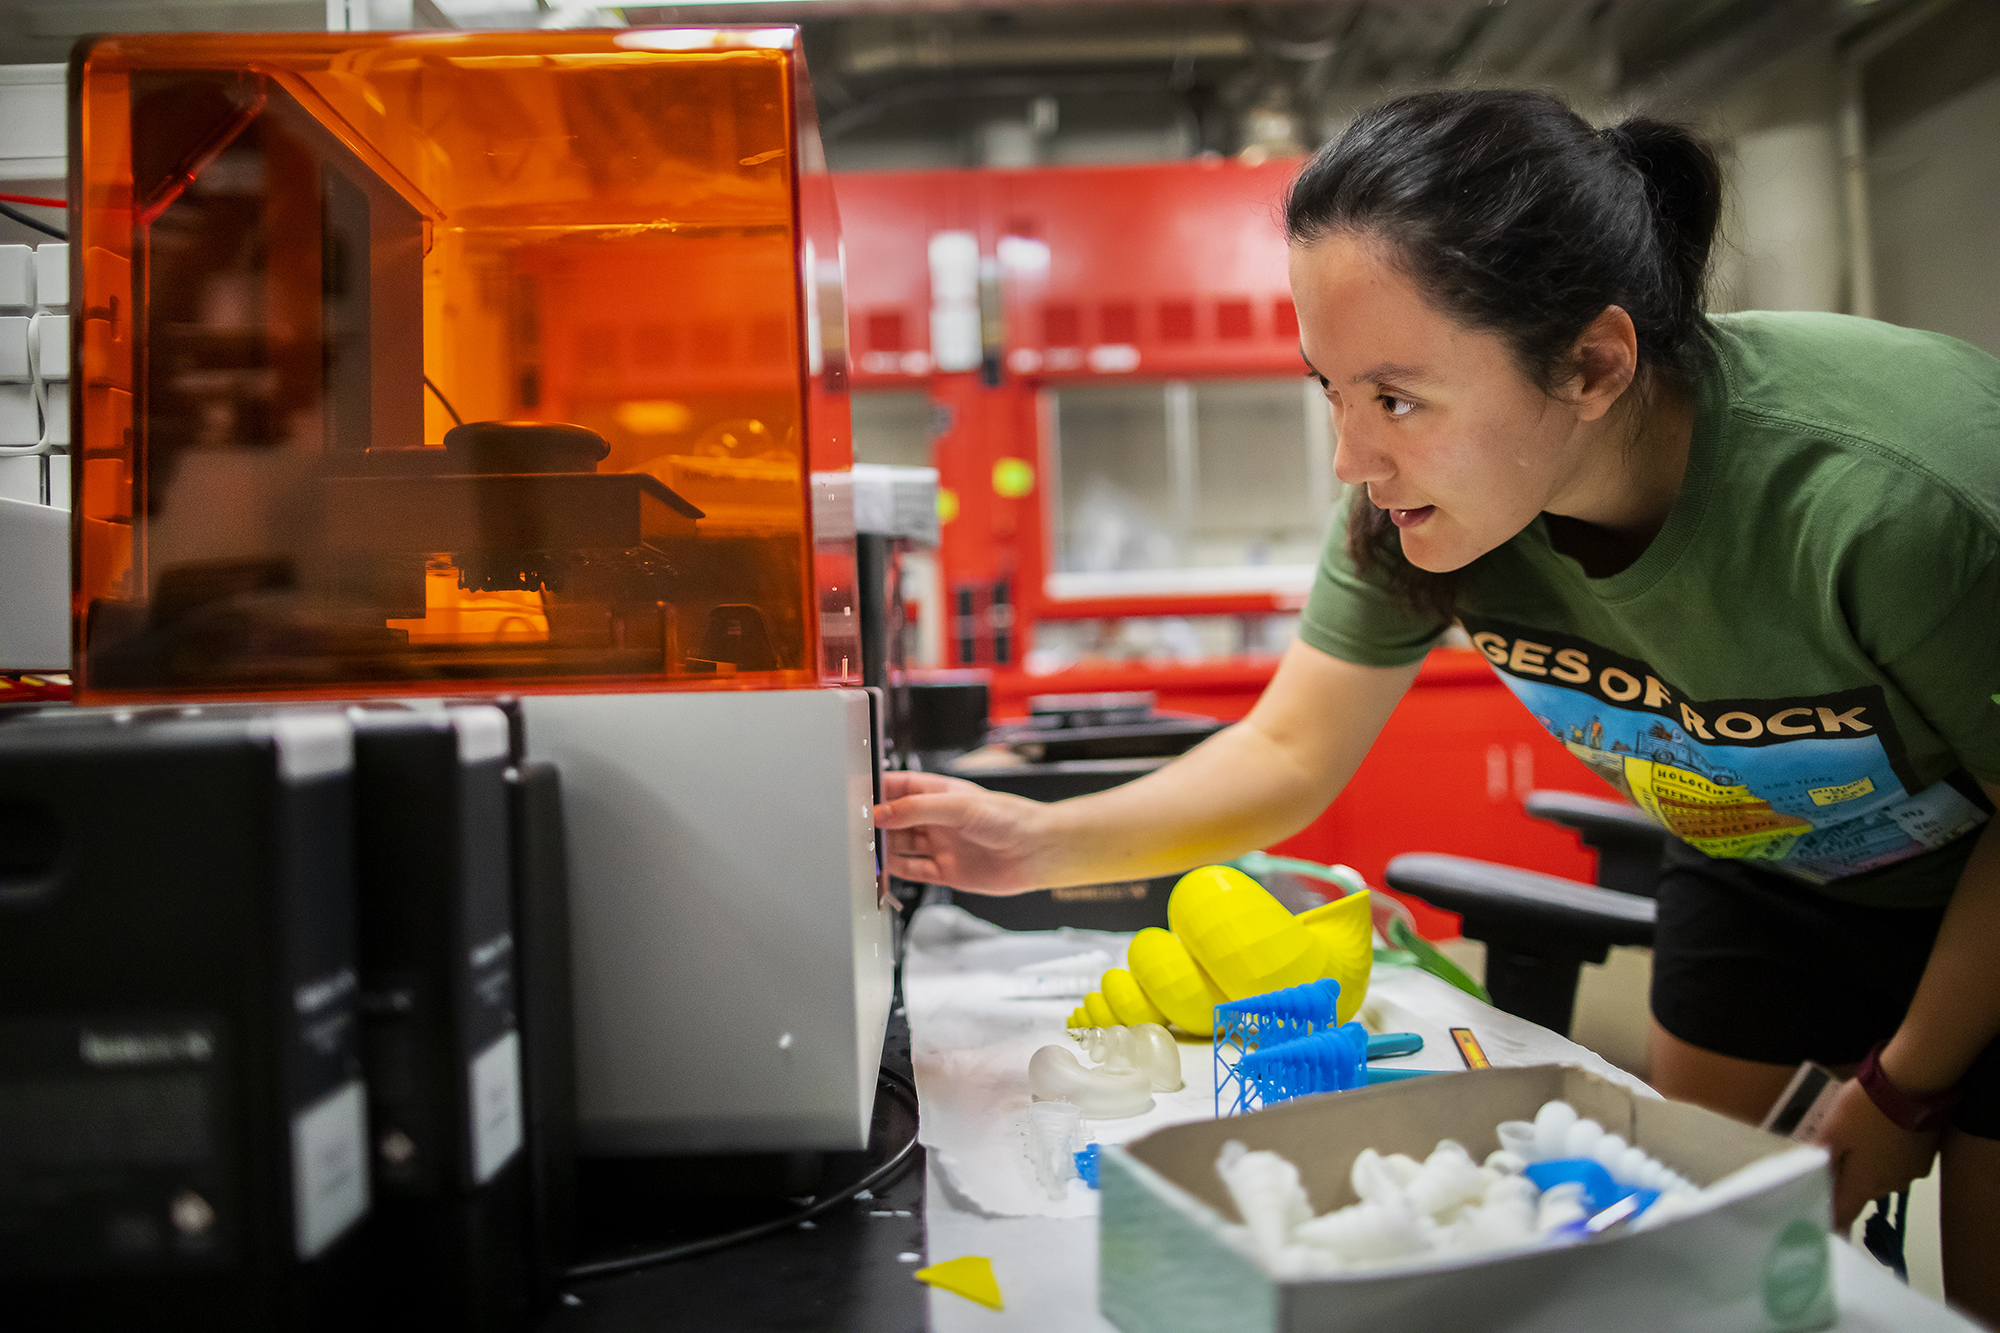 Scientist looks at a 3D printer in a scientific lab